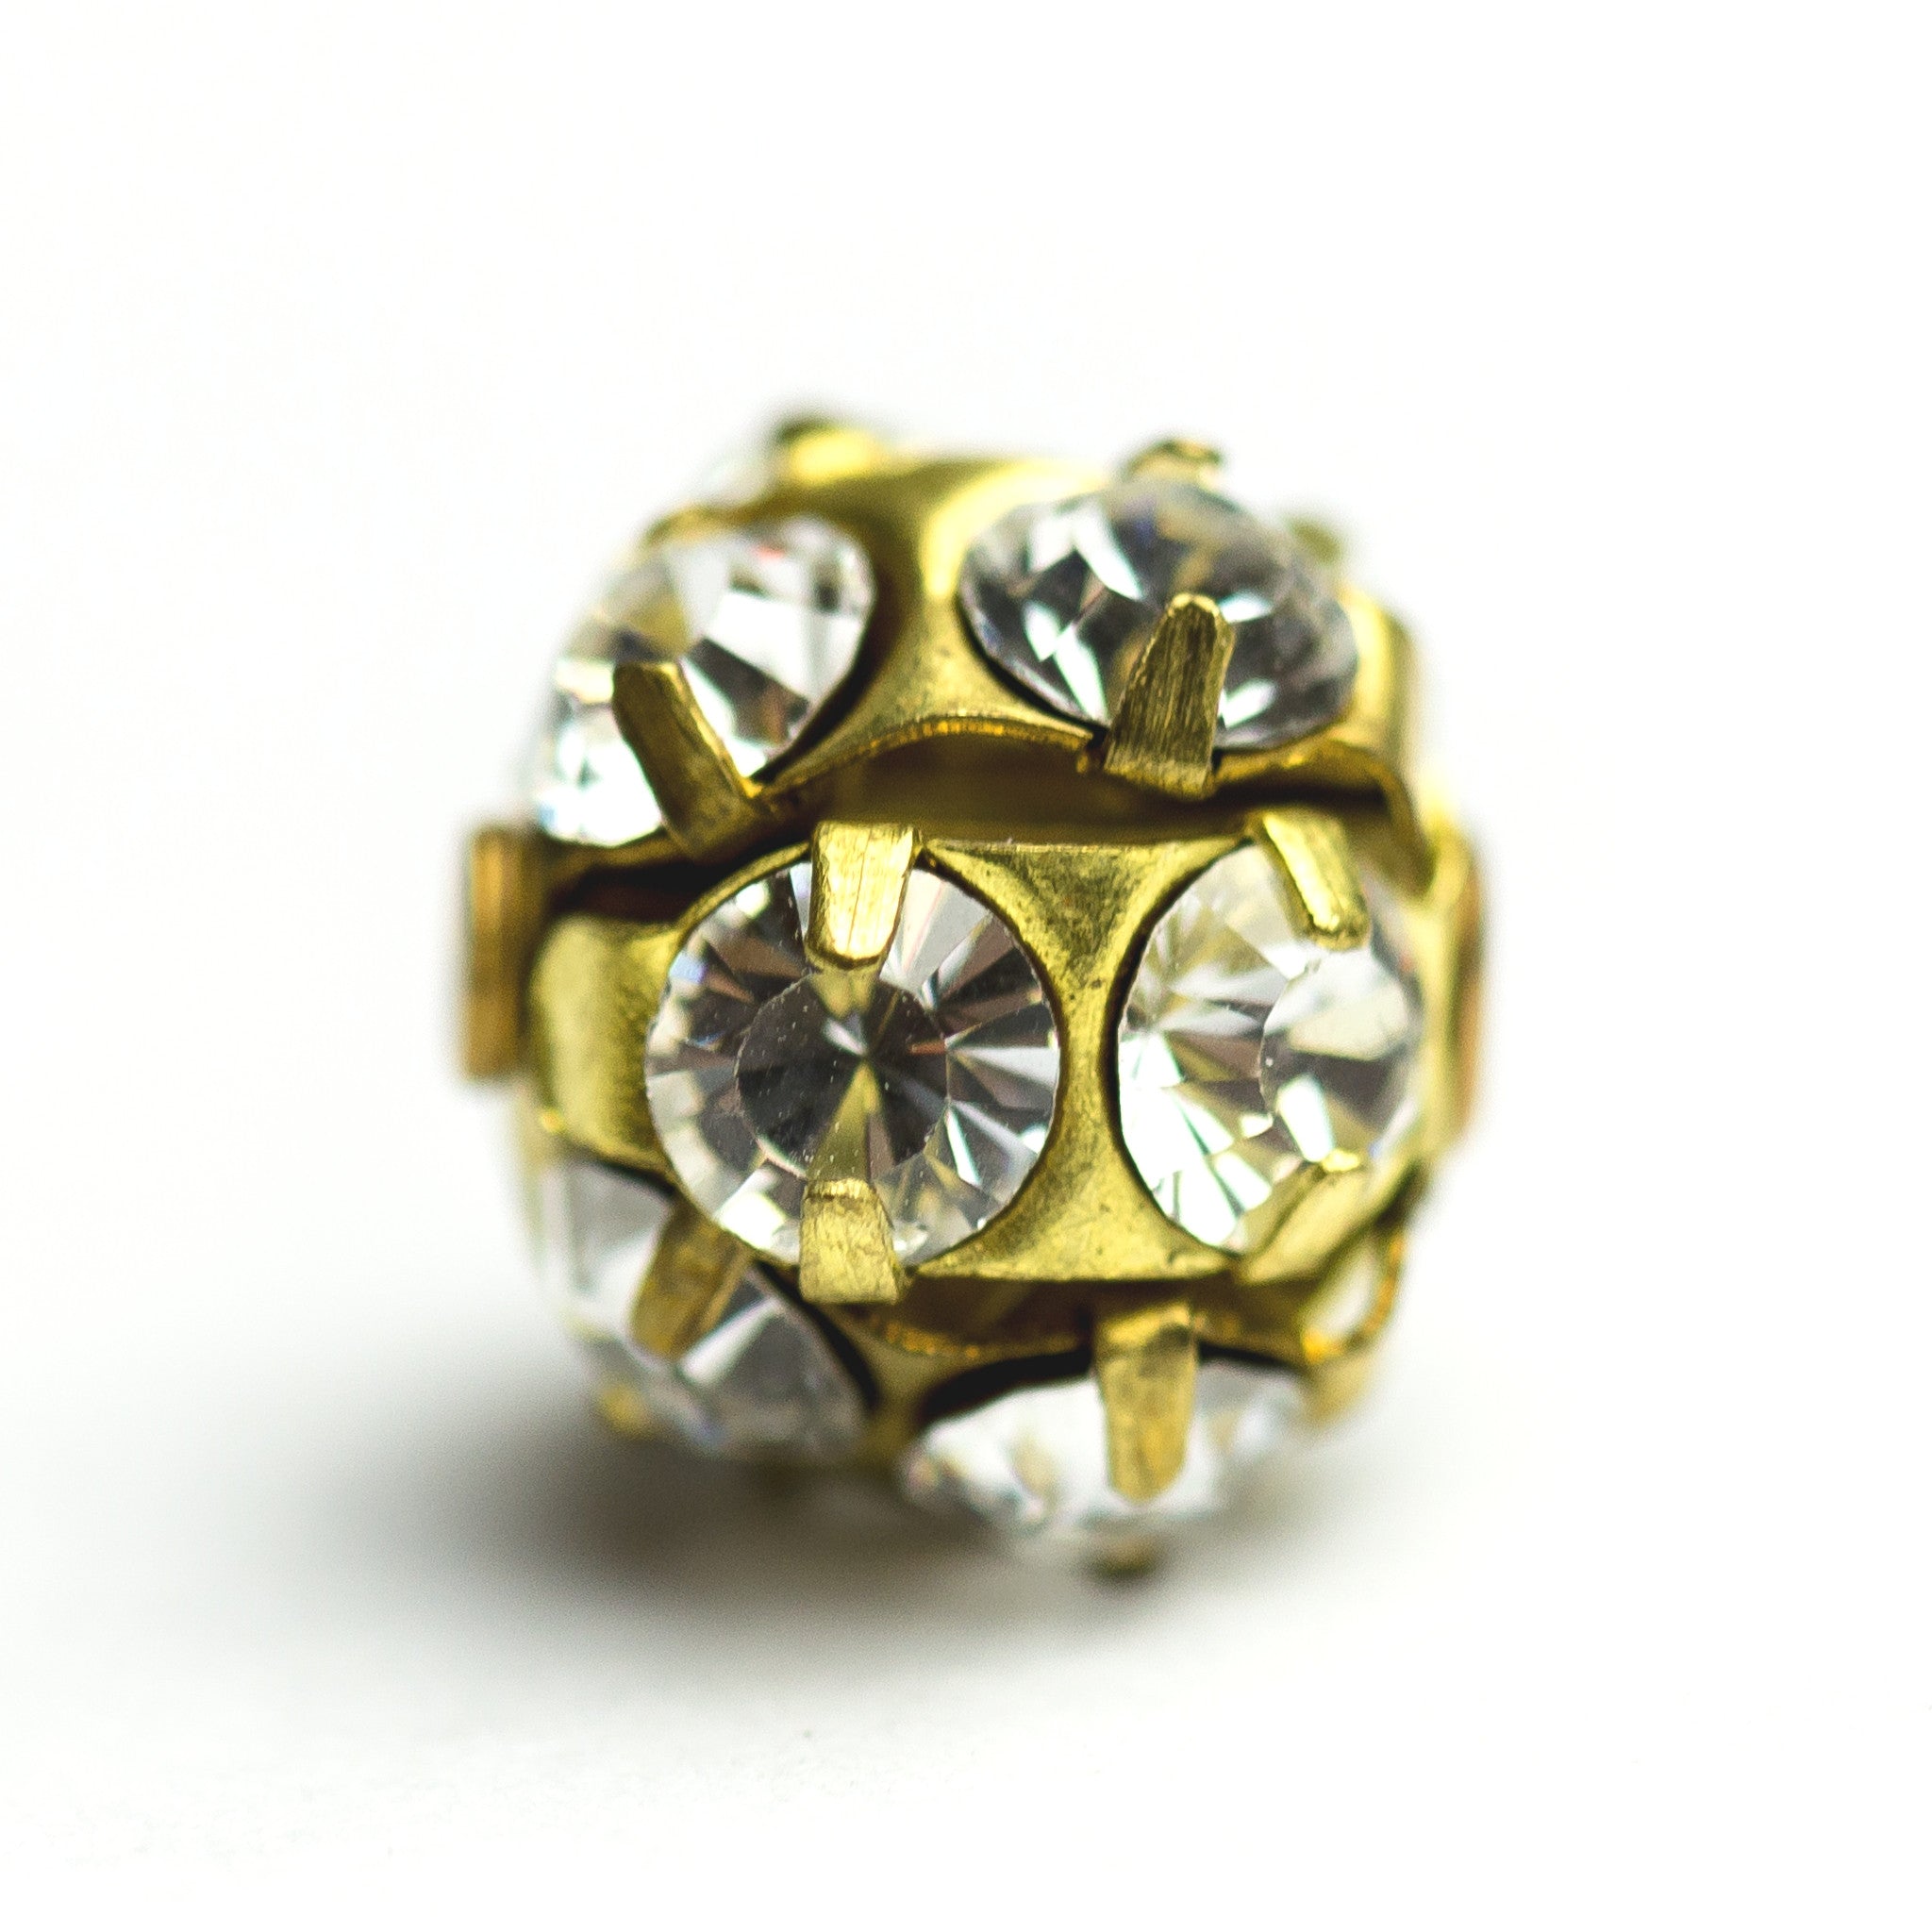 12MM Rhinestone Ball Crystal/Brass (2 pieces)